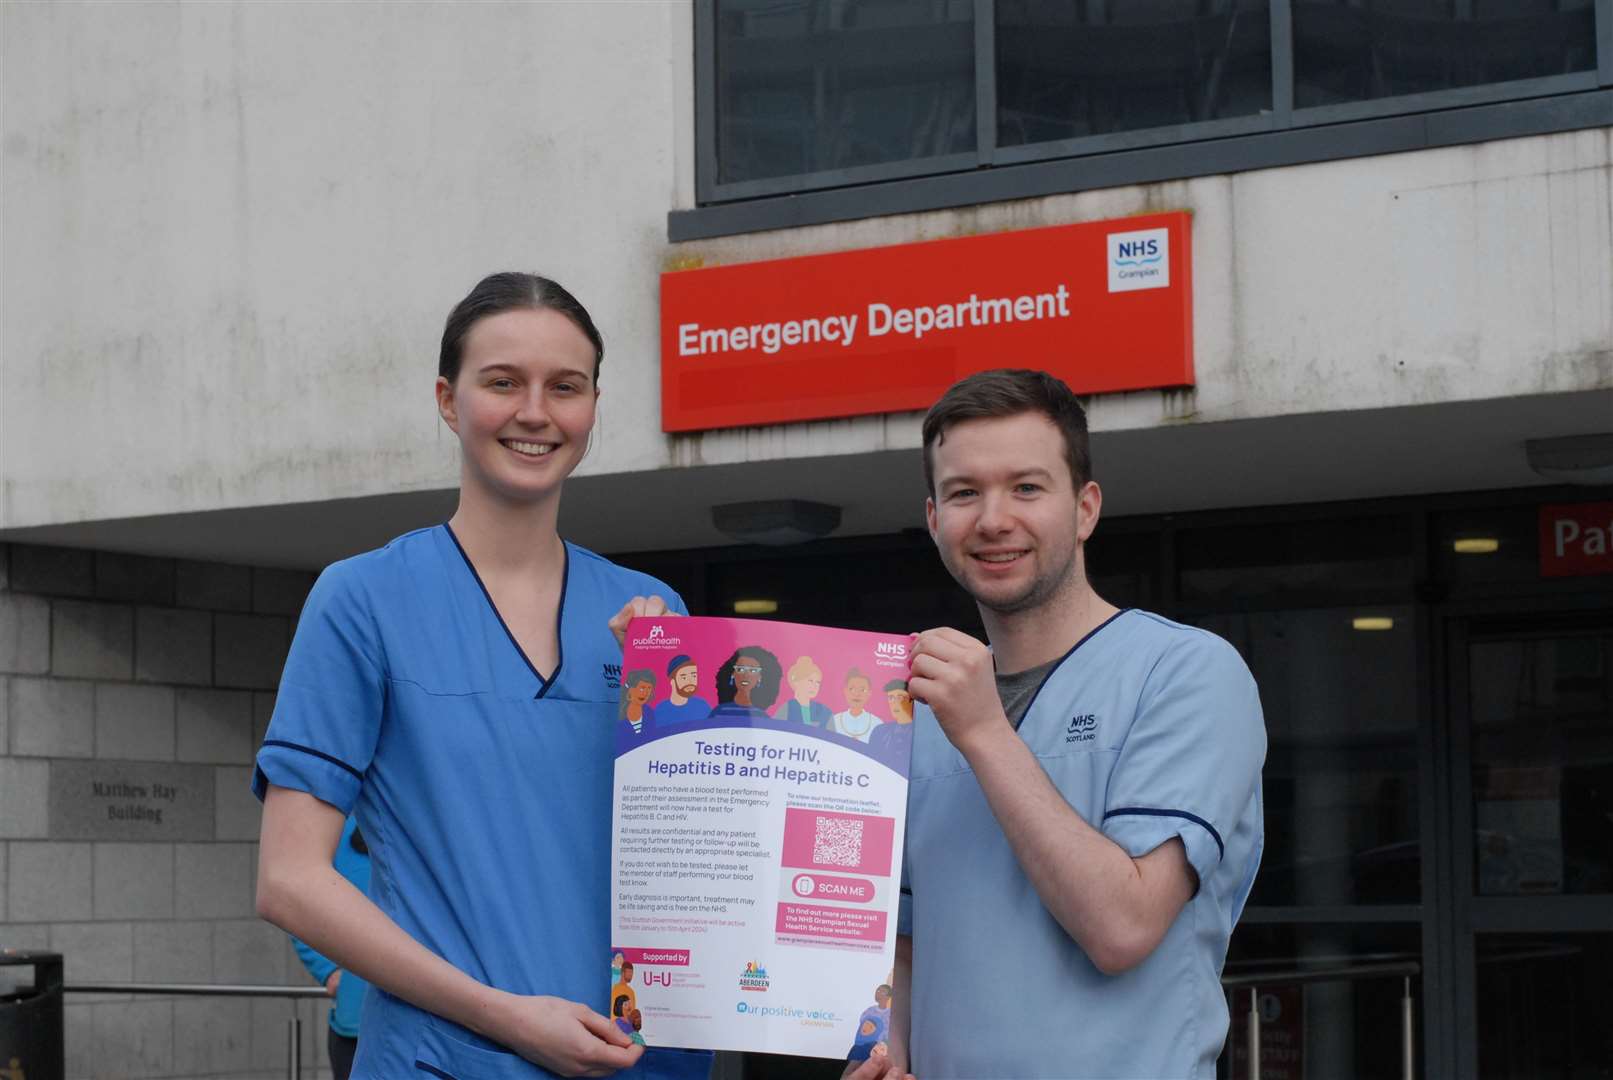 Staff nurse Charlotte Pinkerton and Alexander Brooks, senior health care support who are championing the pilot scheme.